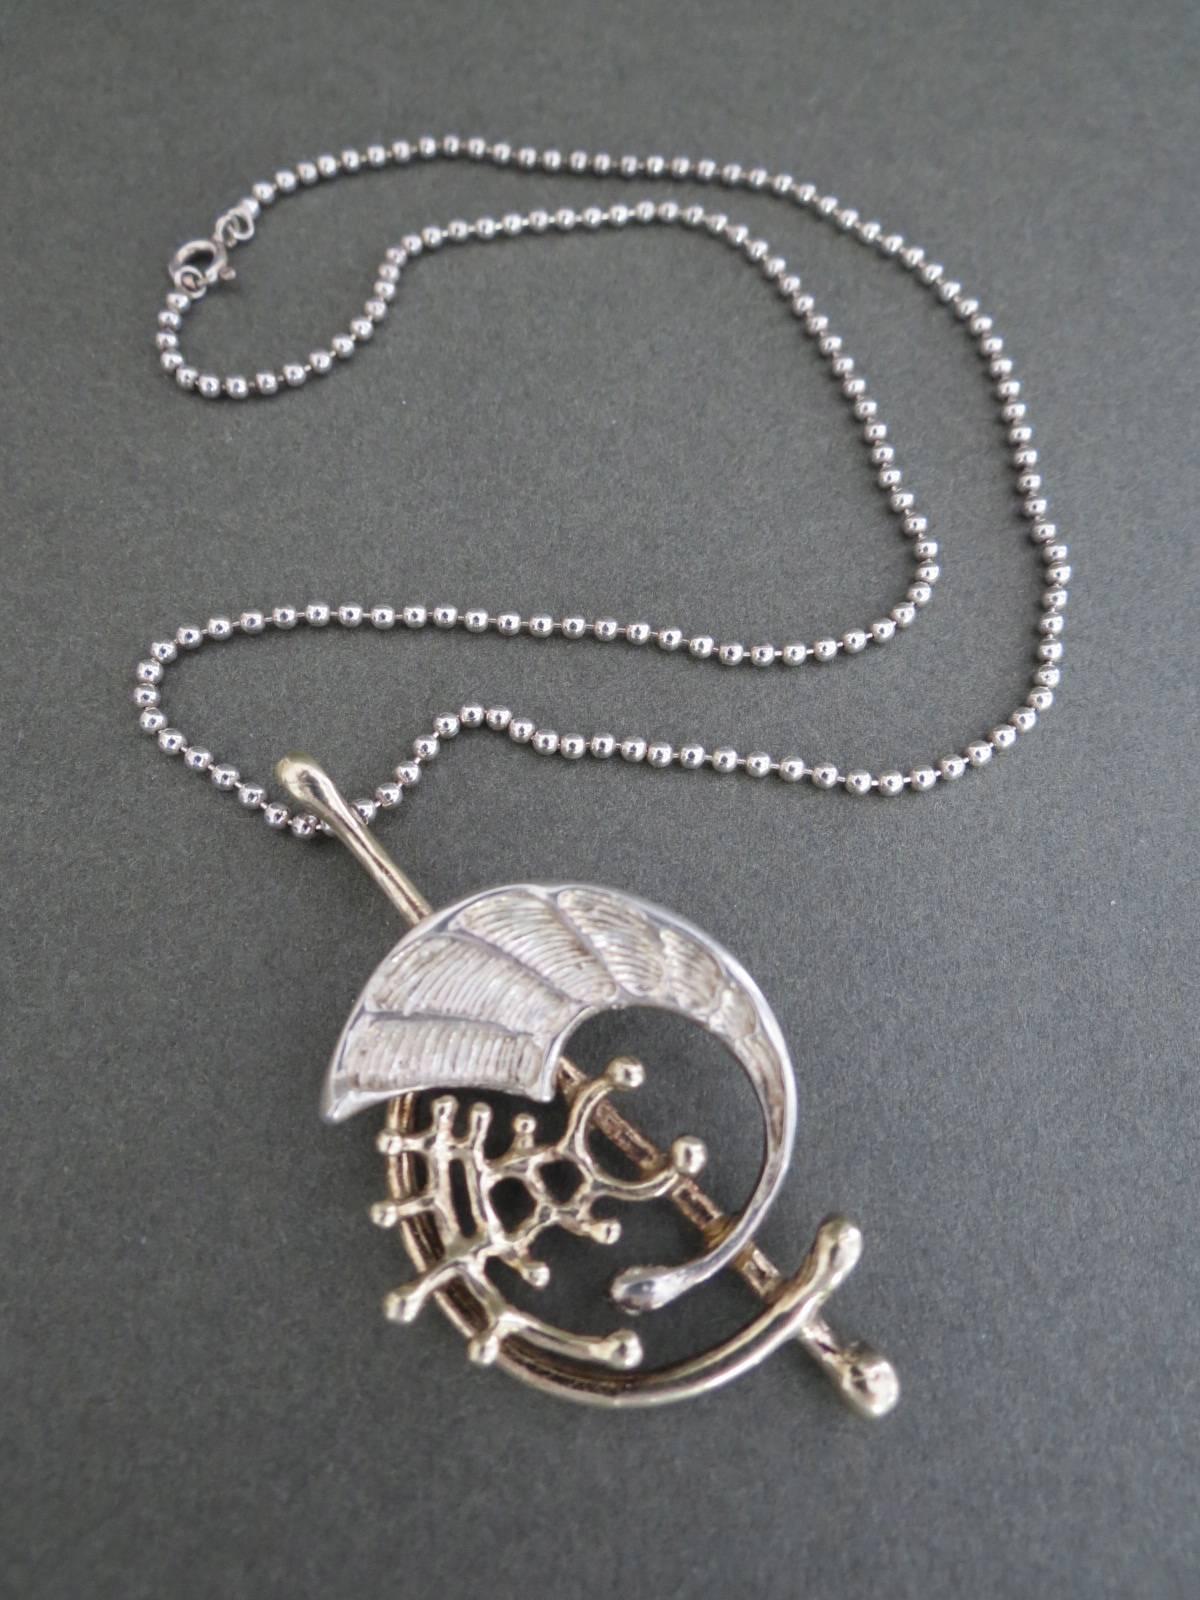 Vintage Sterling Silver Modernist Danish Pendant Necklace. Necklace added .
Item Specifics
Length: 40cm (approx 15.50